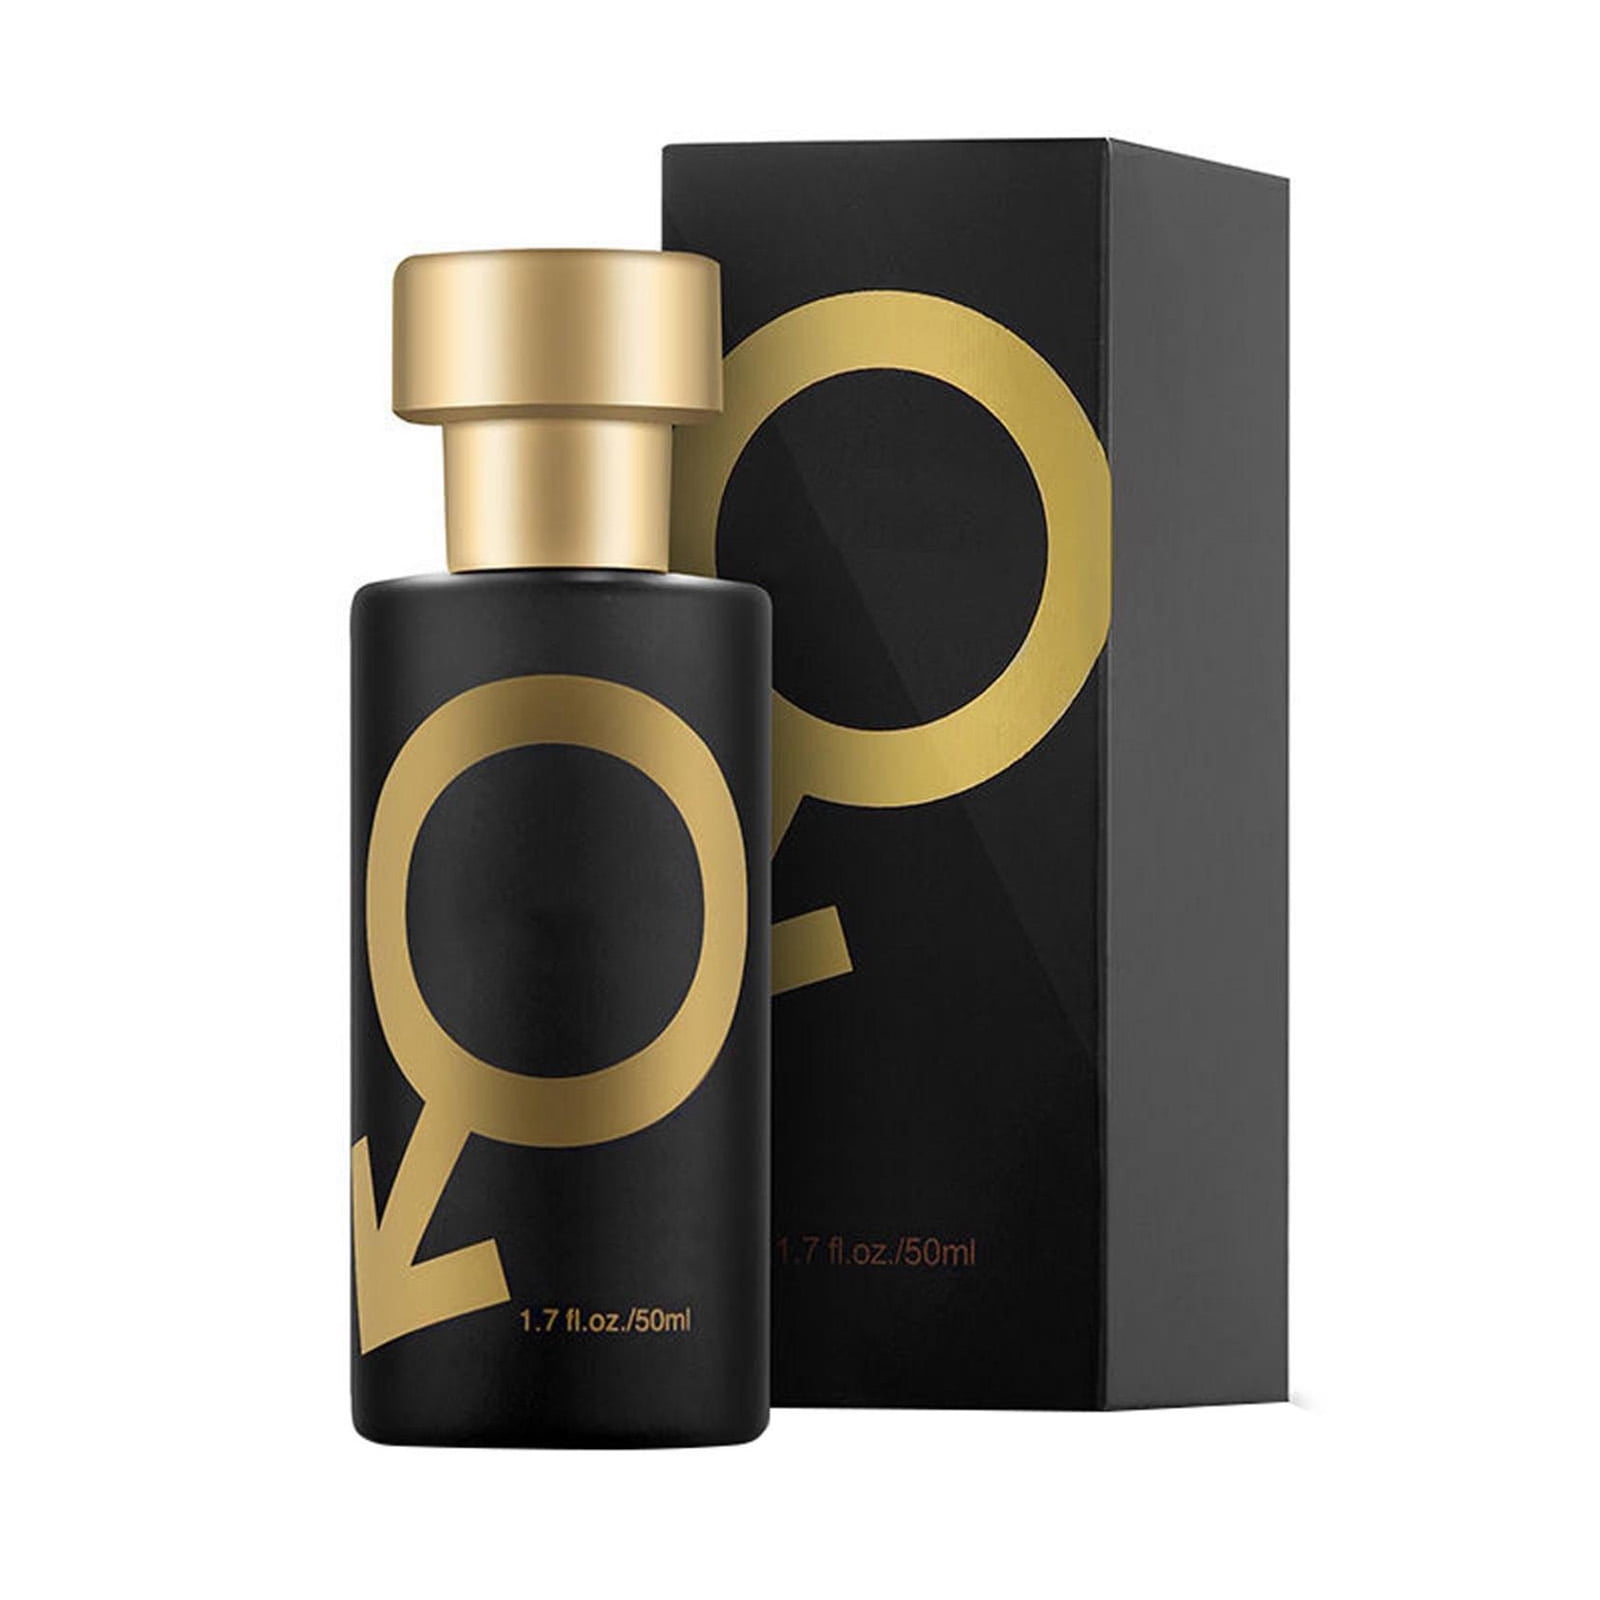 CUPID Pheromone Perfume to Attract Men Women 50ml – STS